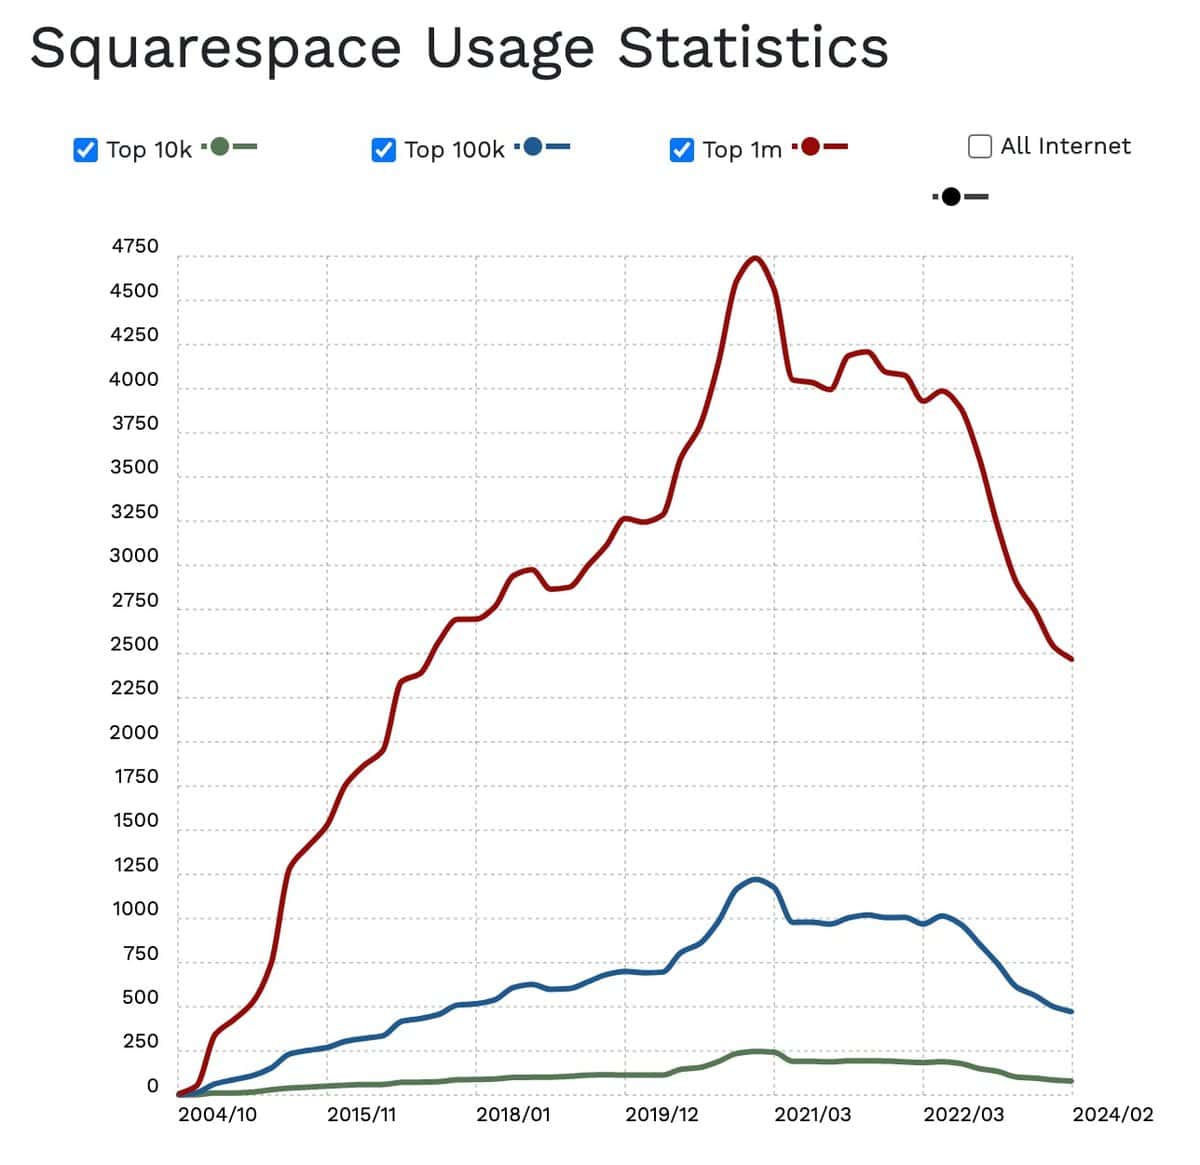 Squarespace usage statistics